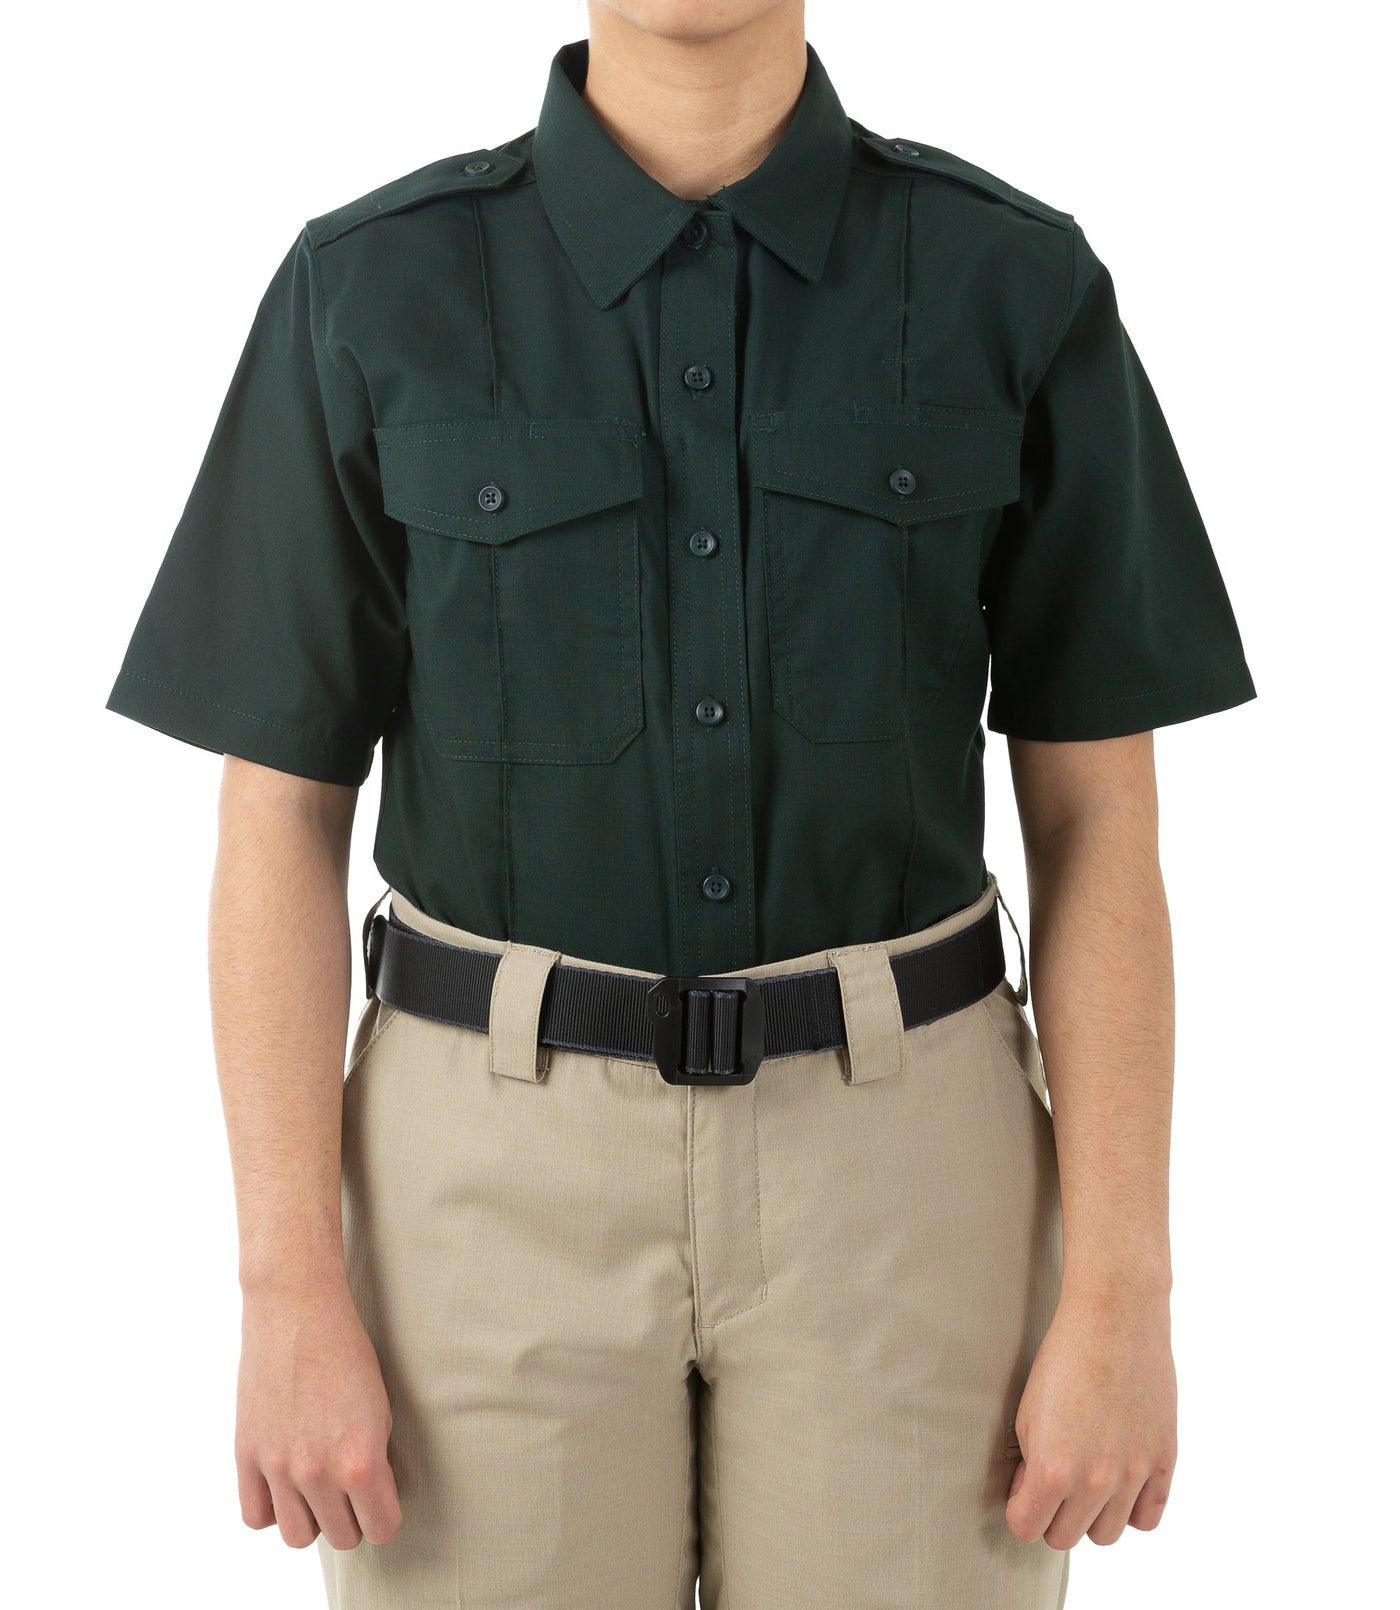 Women's PRO DUTY™ Uniform Short Sleeve Shirt - Spruce Green